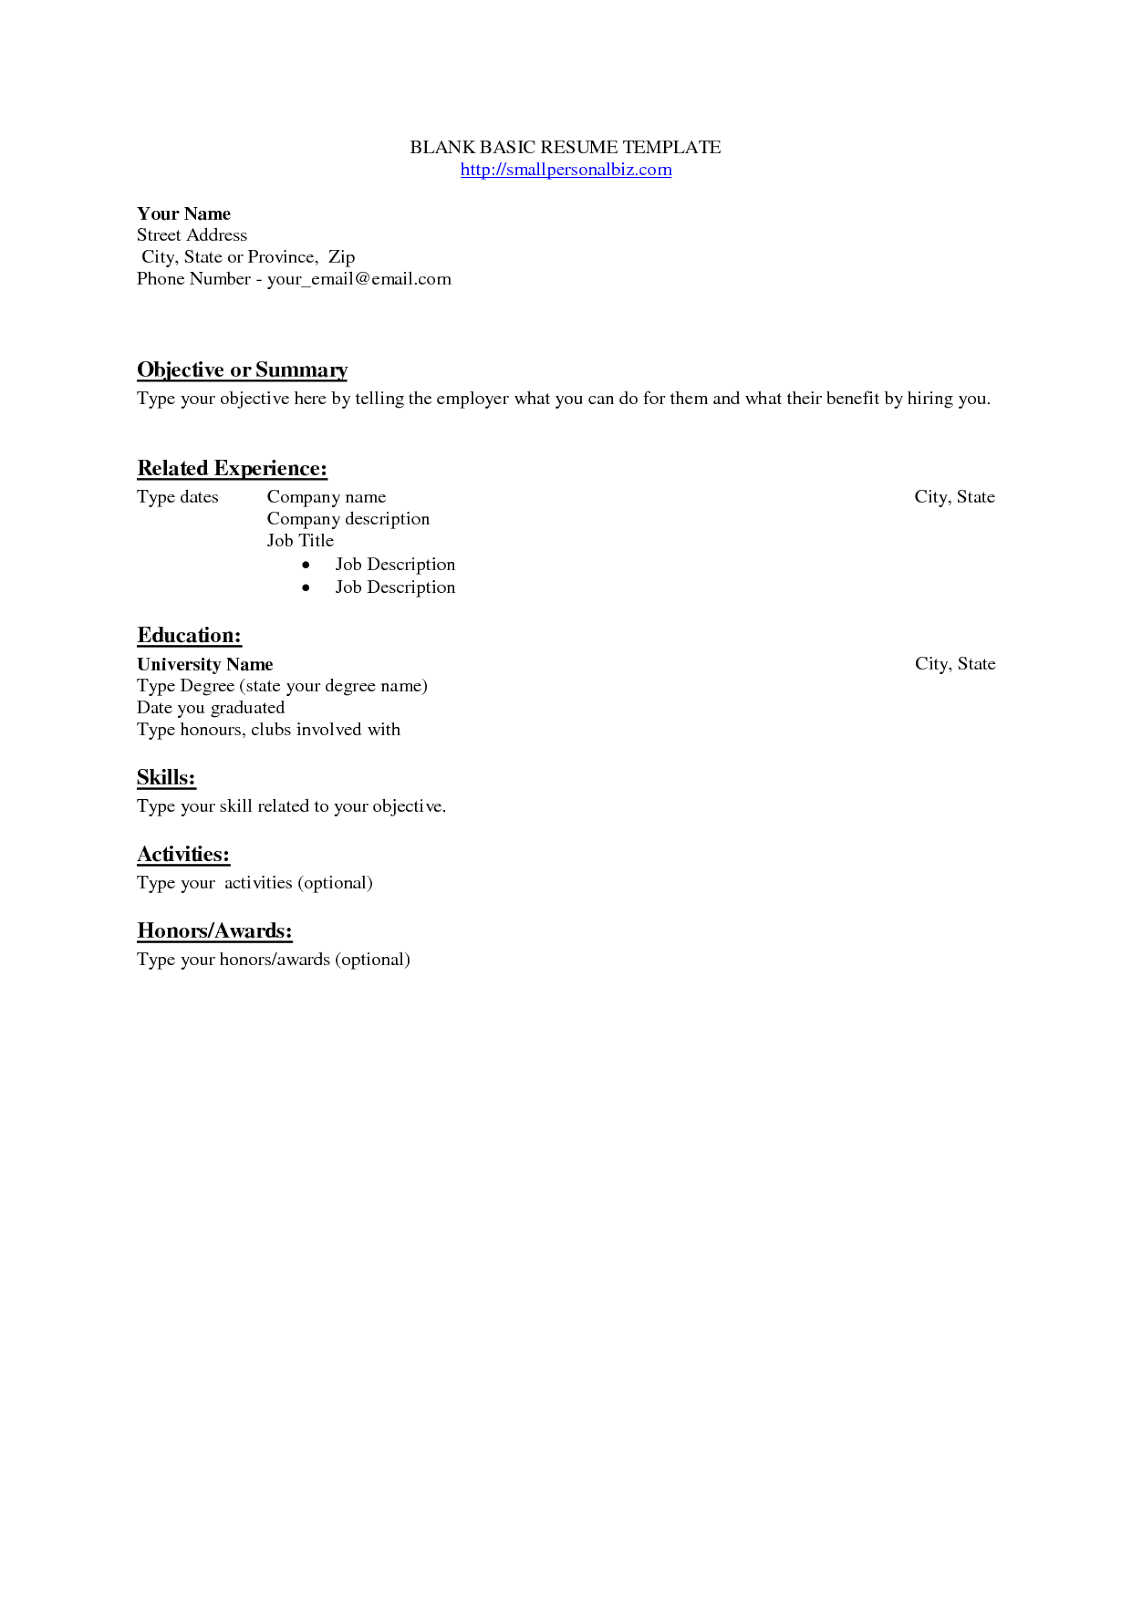 Resume plain text formatting